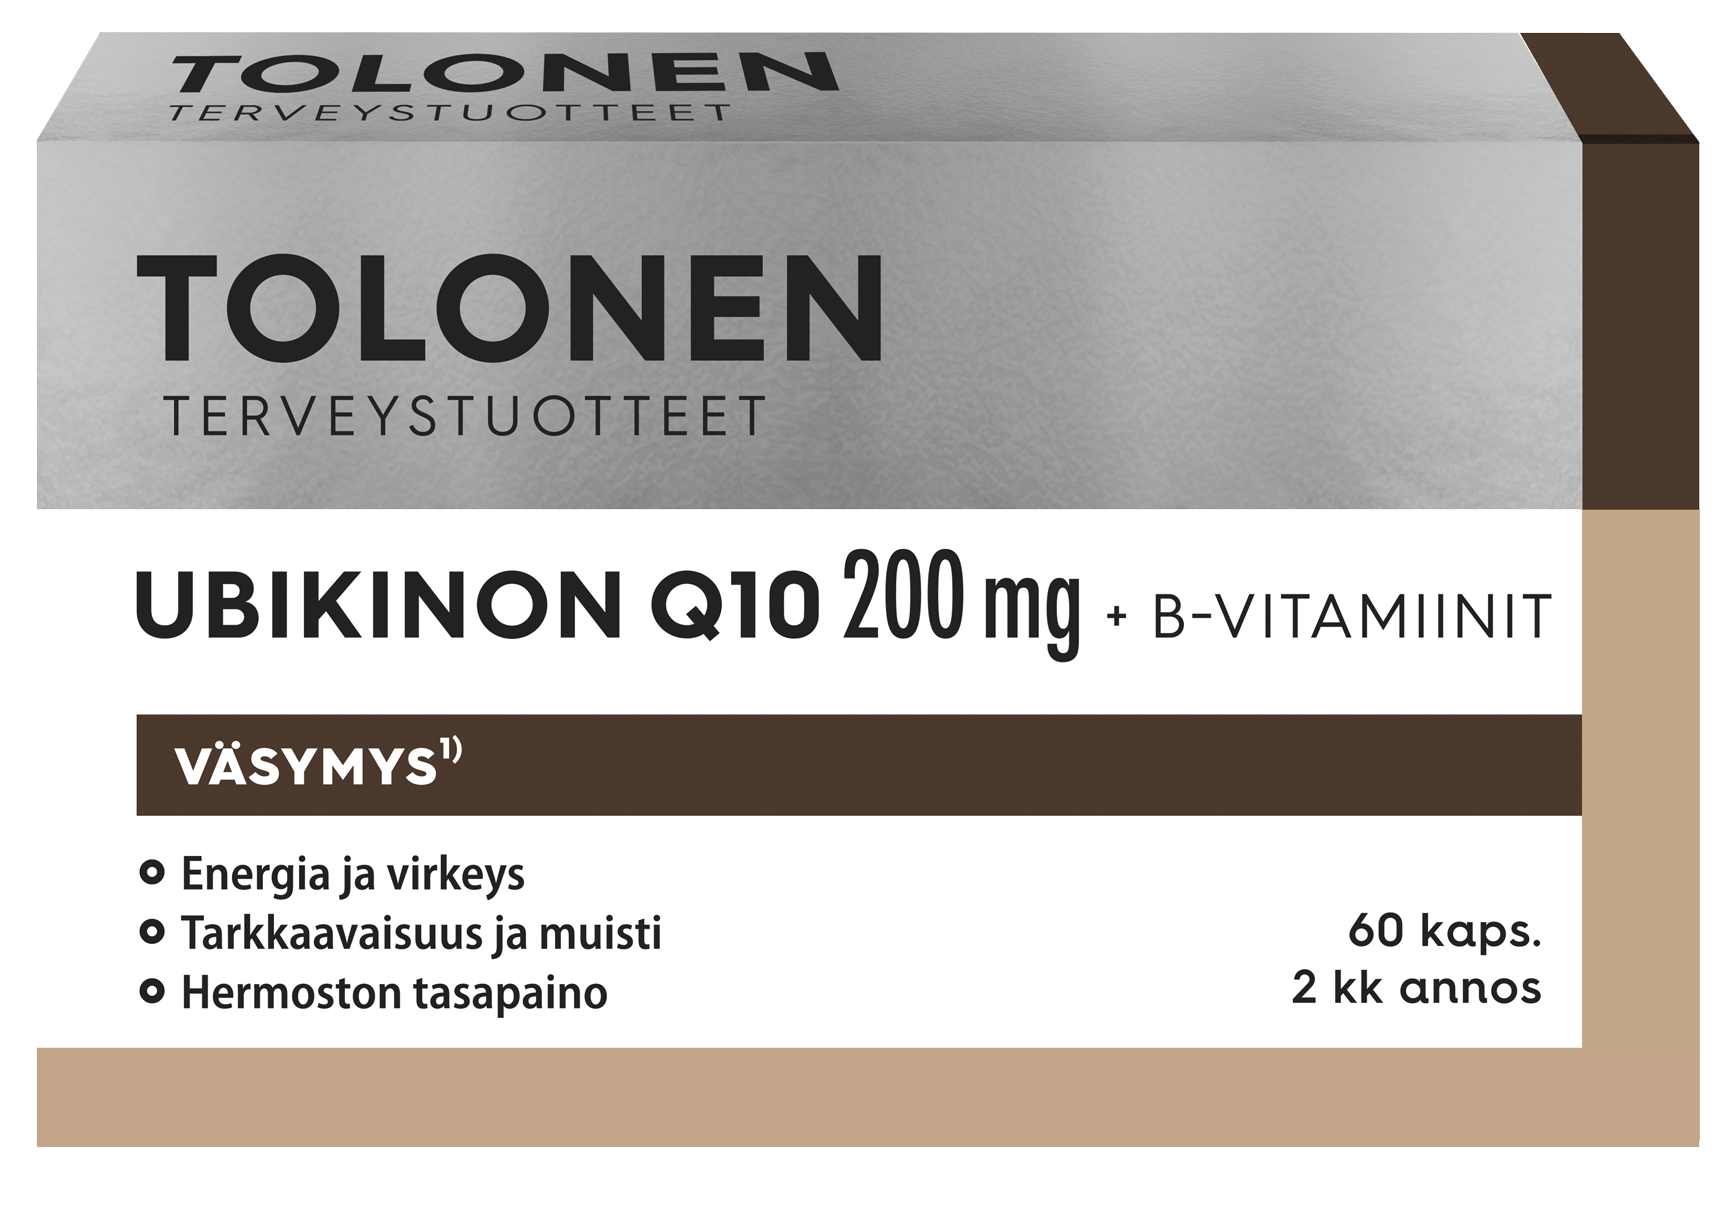 Tolonen Ubikinon Q10 200 mg + B-vitamiinit 60 kaps.